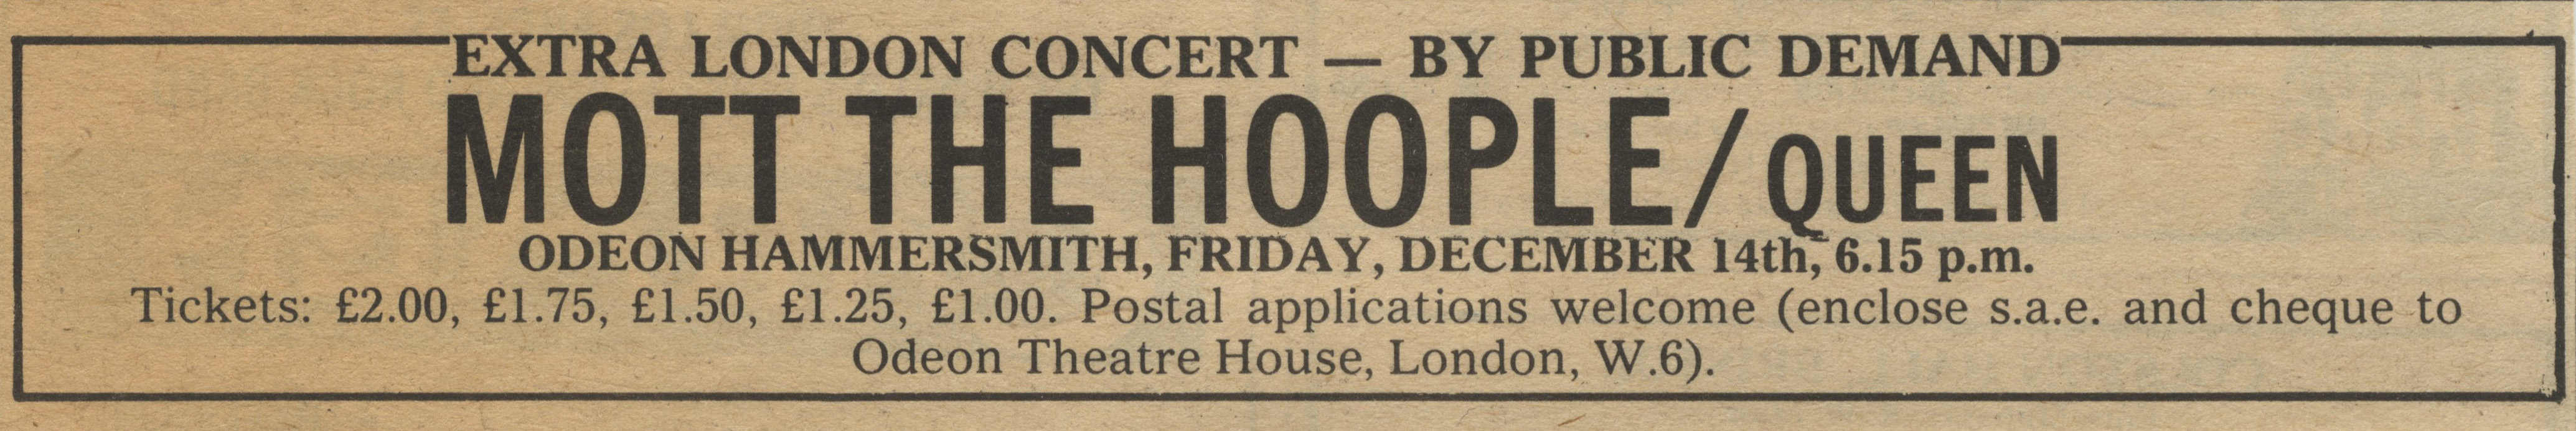 Mott/Queen in London on 14.12.1973 - extra show